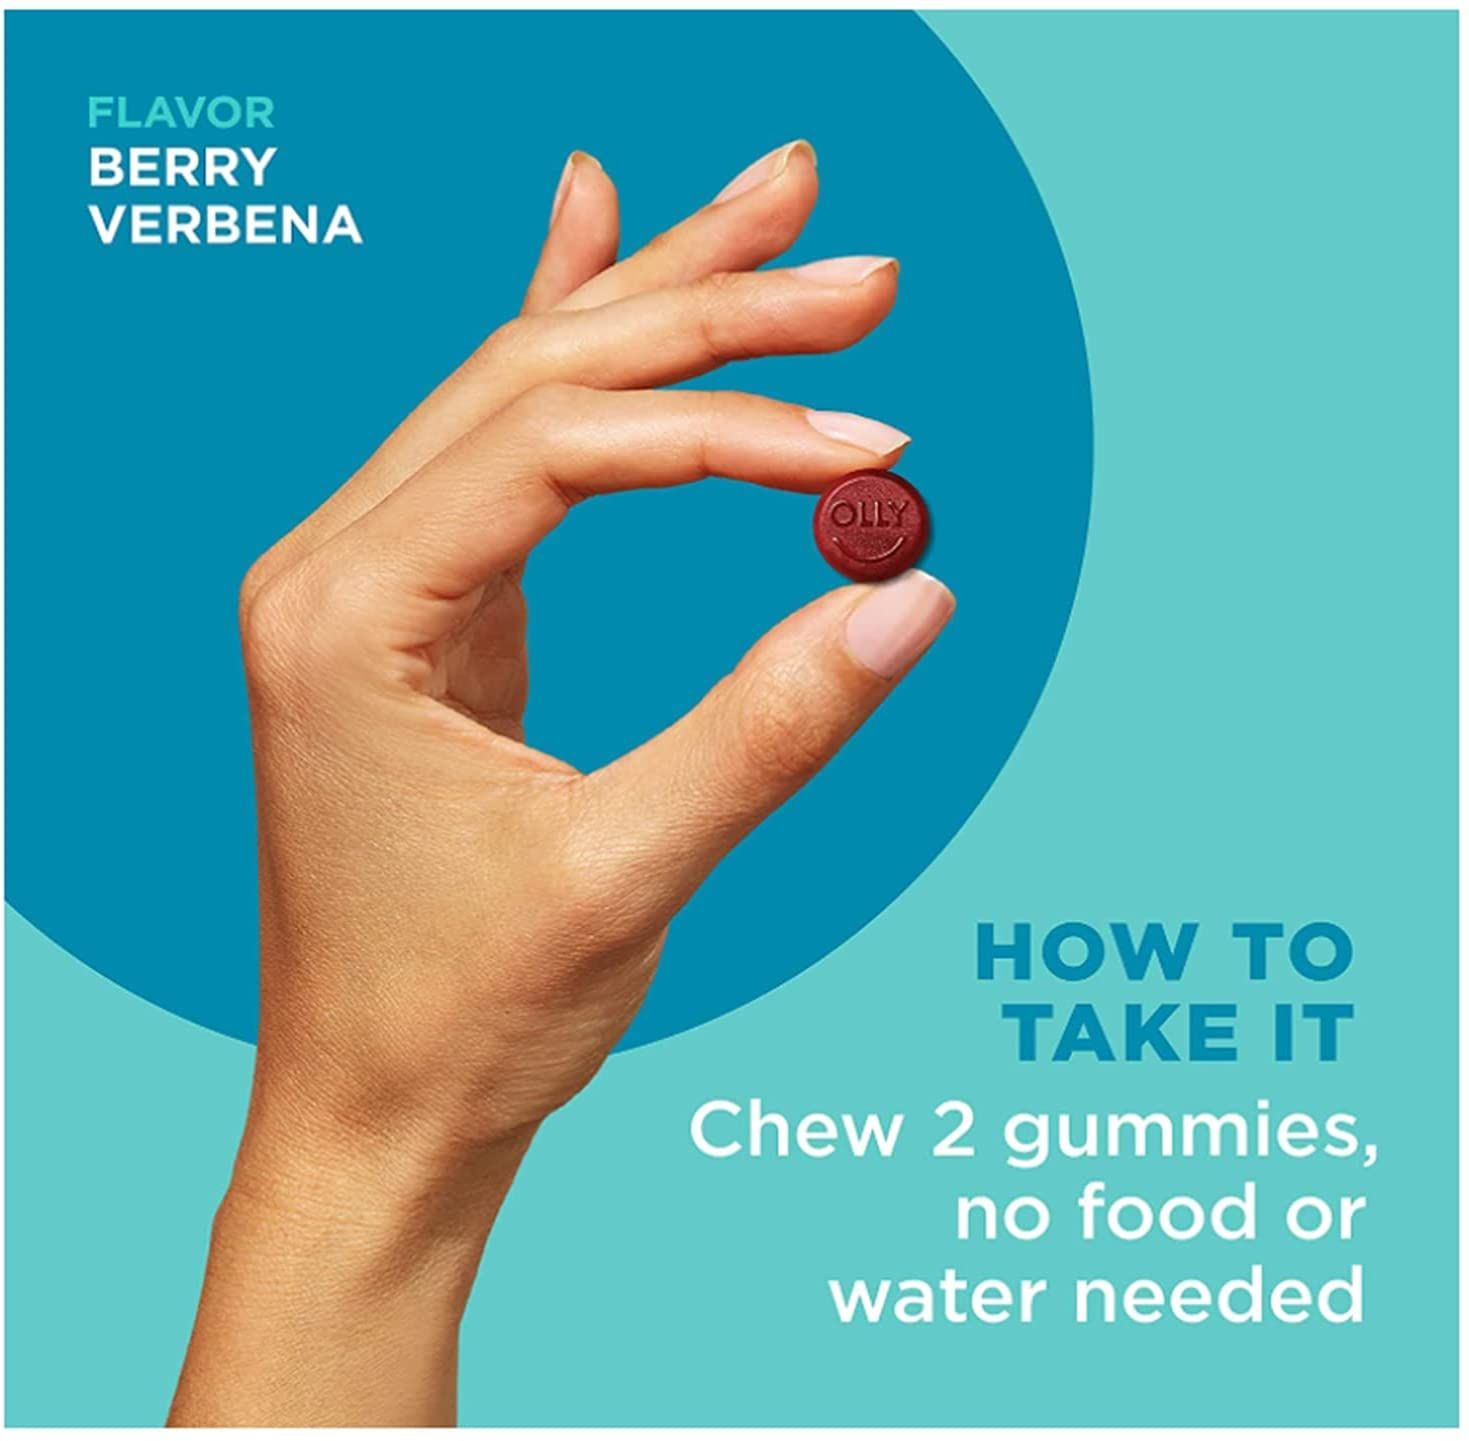 OLLY Goodbye Stress Supplement Gummies, Berry Verbena - 42 ct